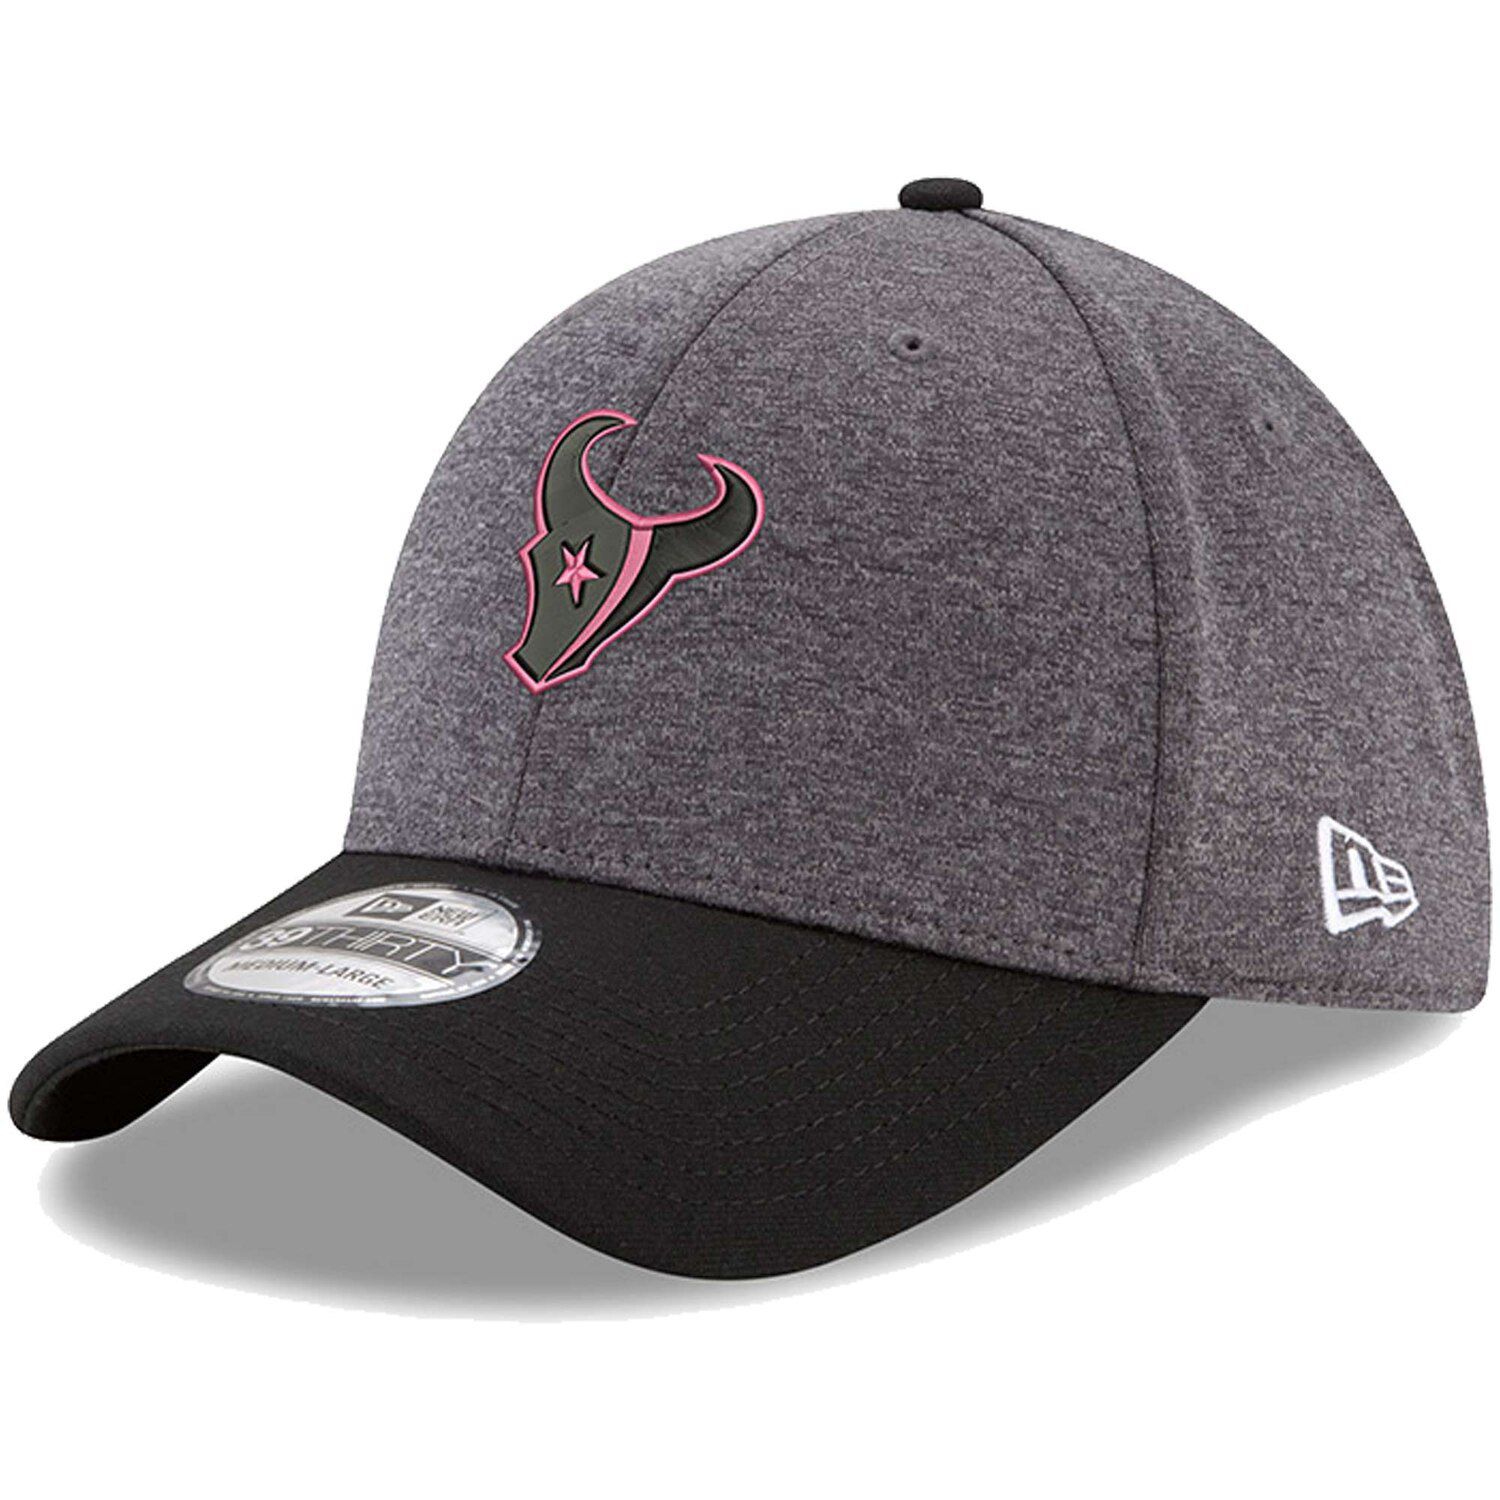 texans pink hat